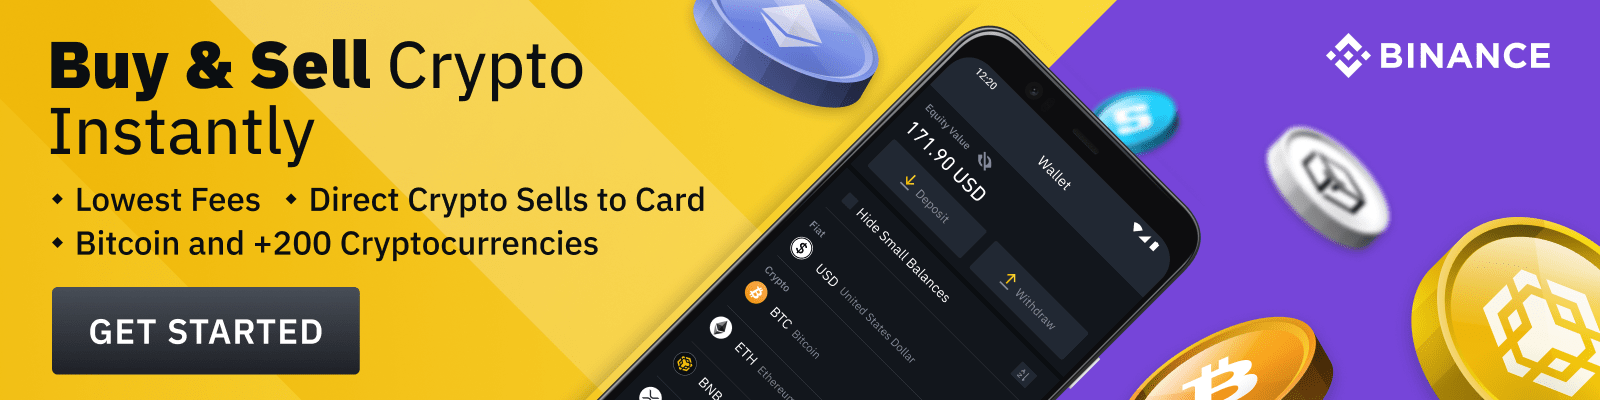 How to Buy Bitcoin With A Credit Card On Binance - UseTheBitcoin